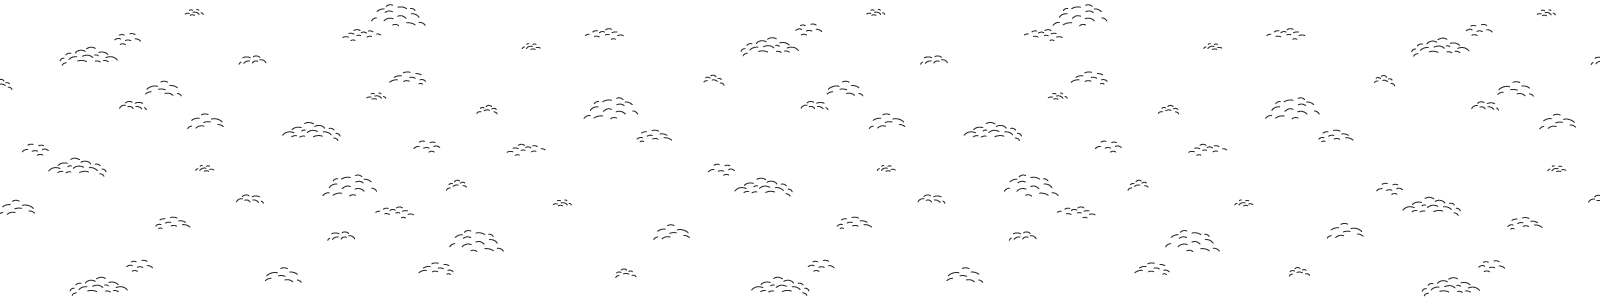 fluffy cloud illustration pattern